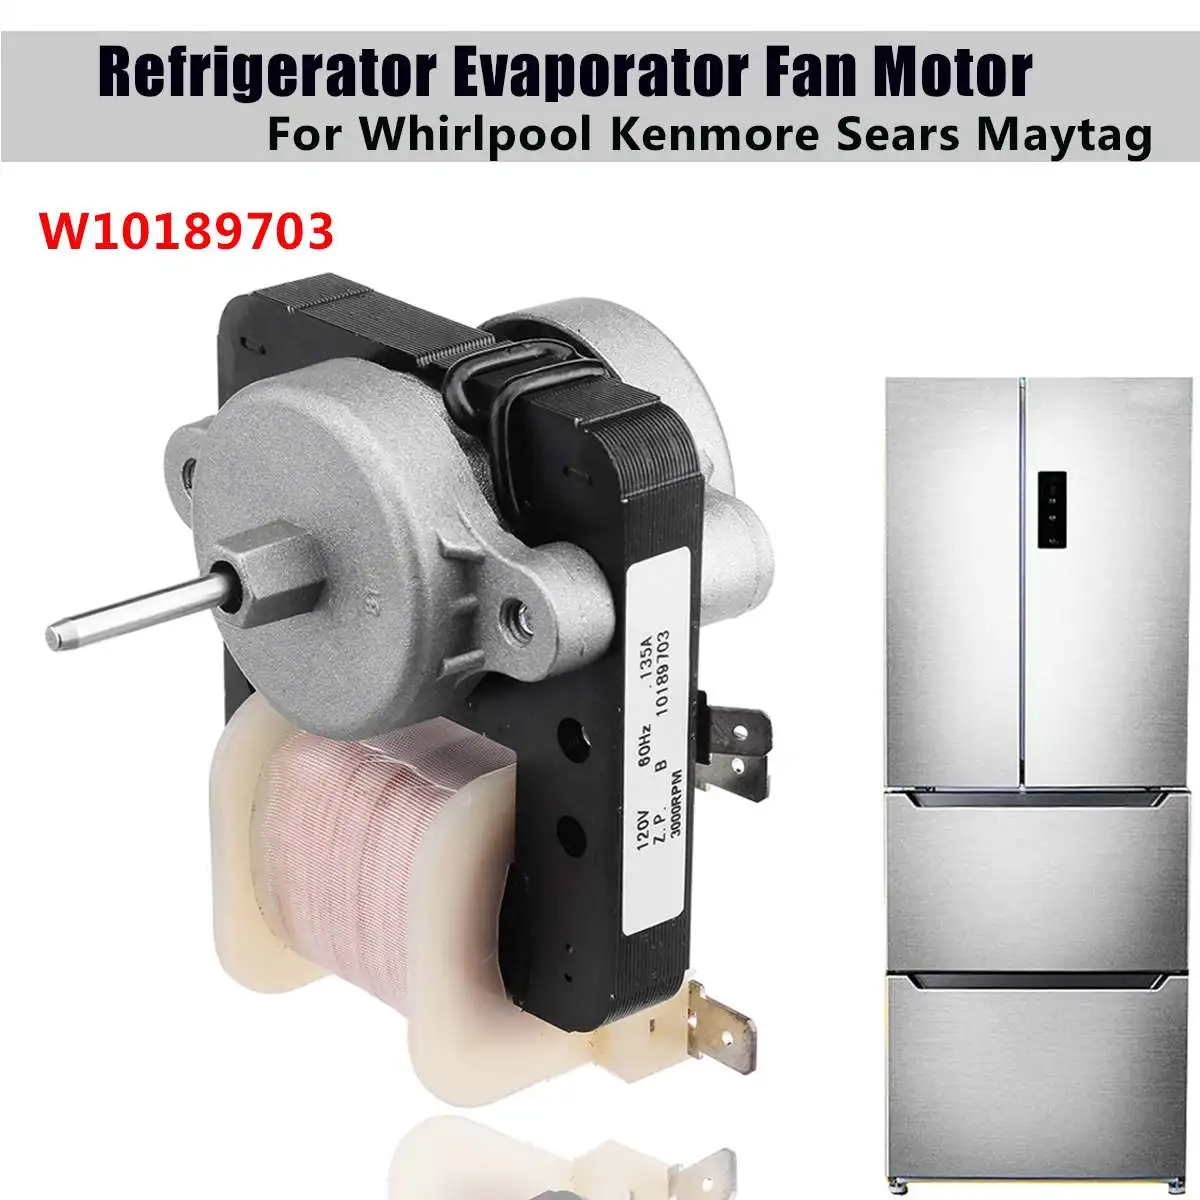 Whirlpool Kenmore 2214986 Refrigerator Evaporator Fan Motor for sale online 